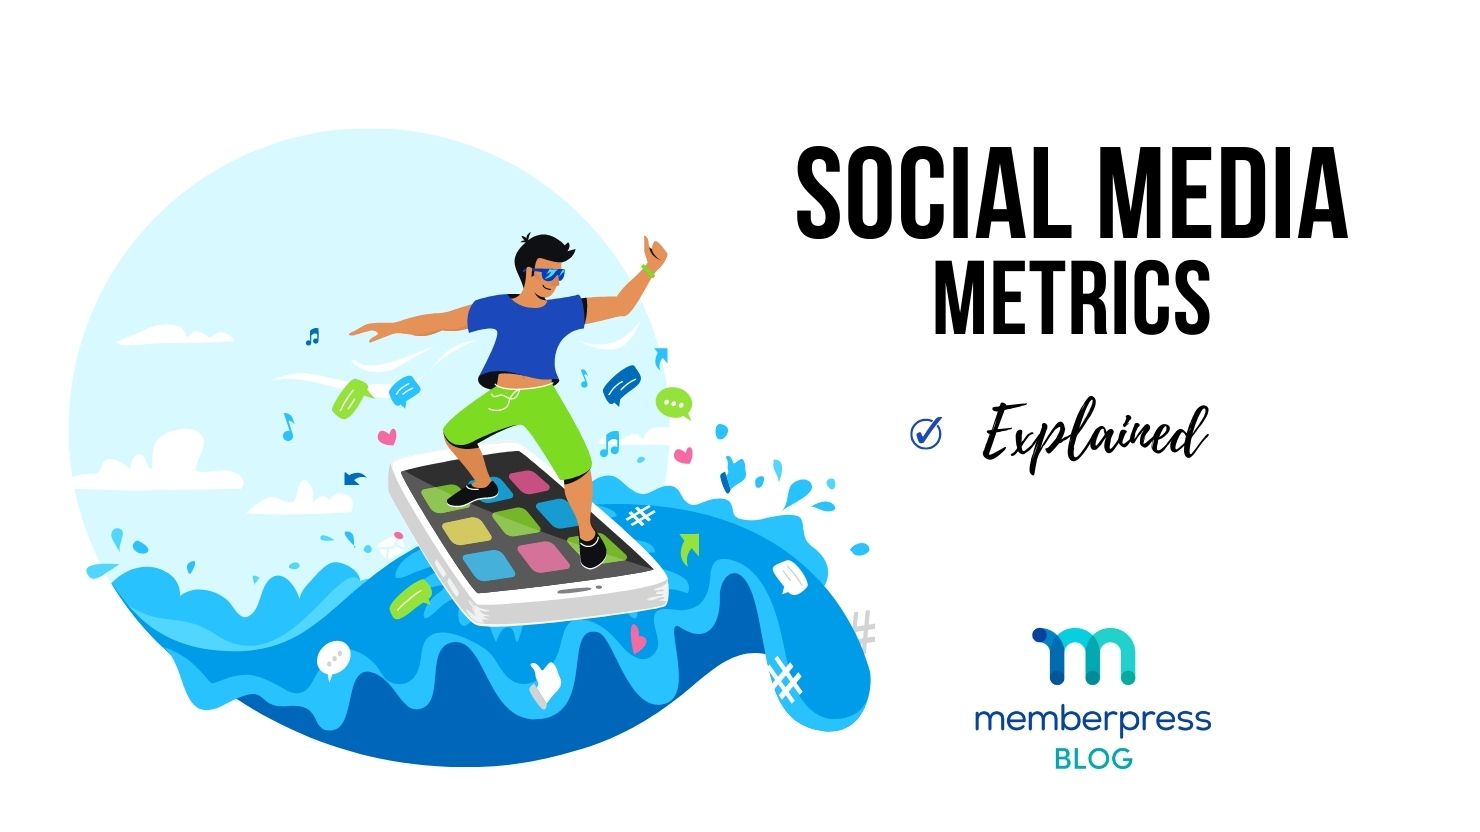 What are social media metrics